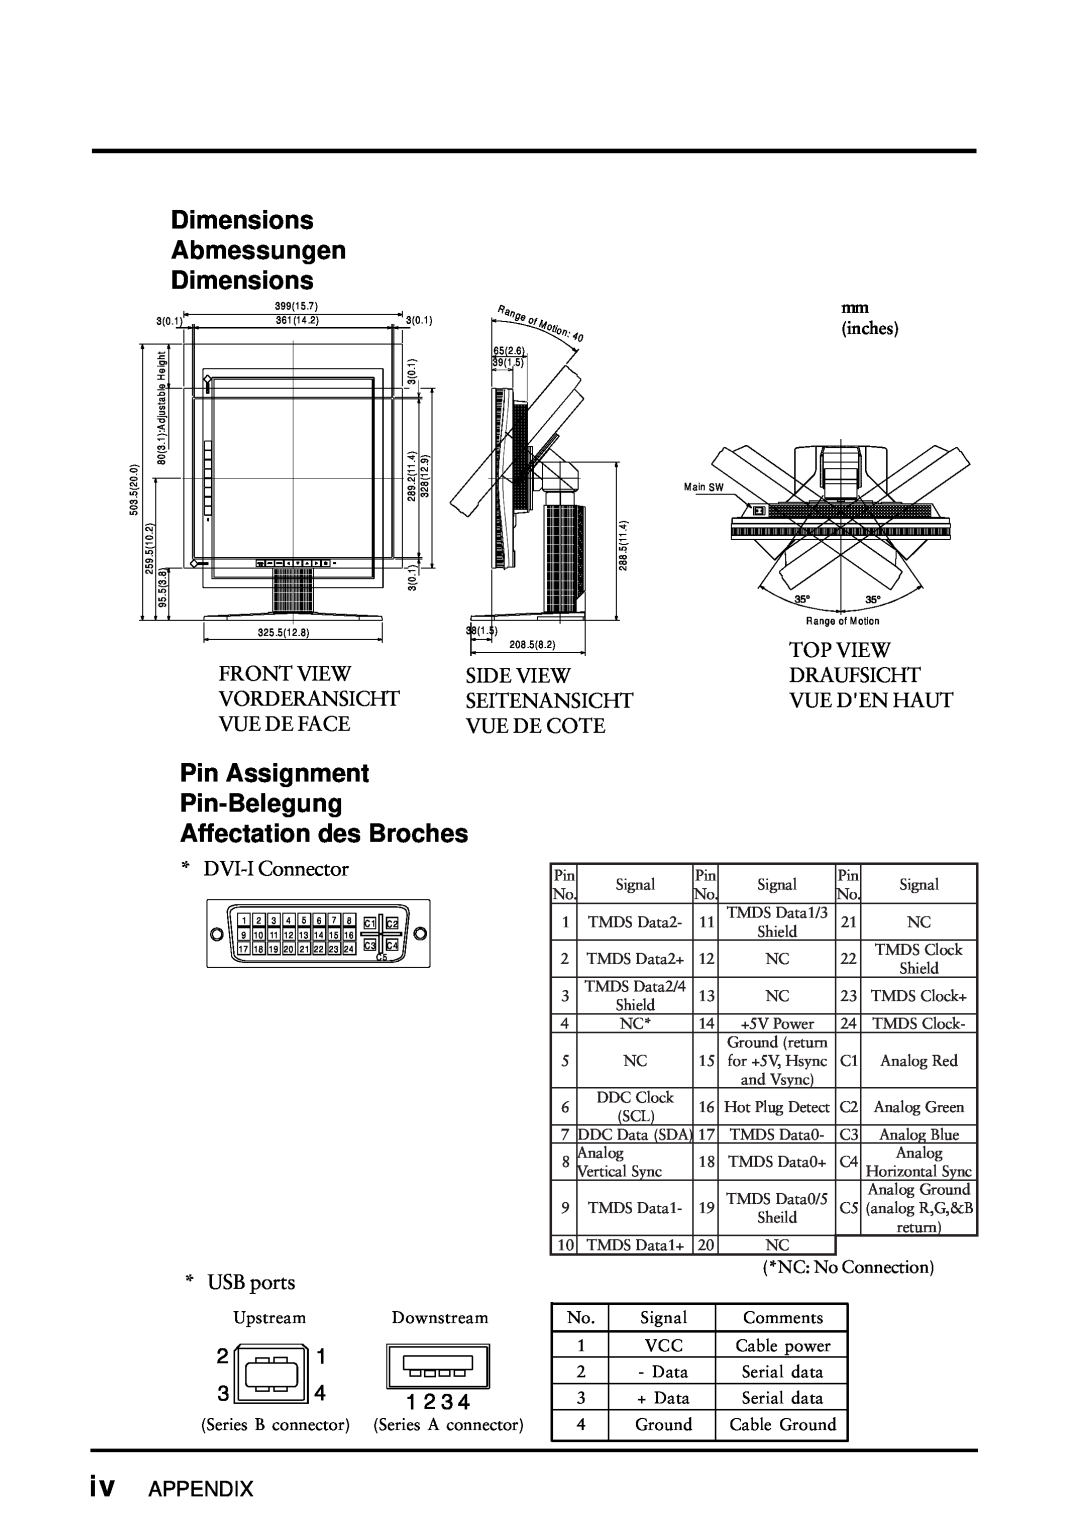 Eizo FlexScan L675 Dimensions Abmessungen Dimensions, Pin Assignment Pin-Belegung Affectation des Broches, iv APPENDIX 